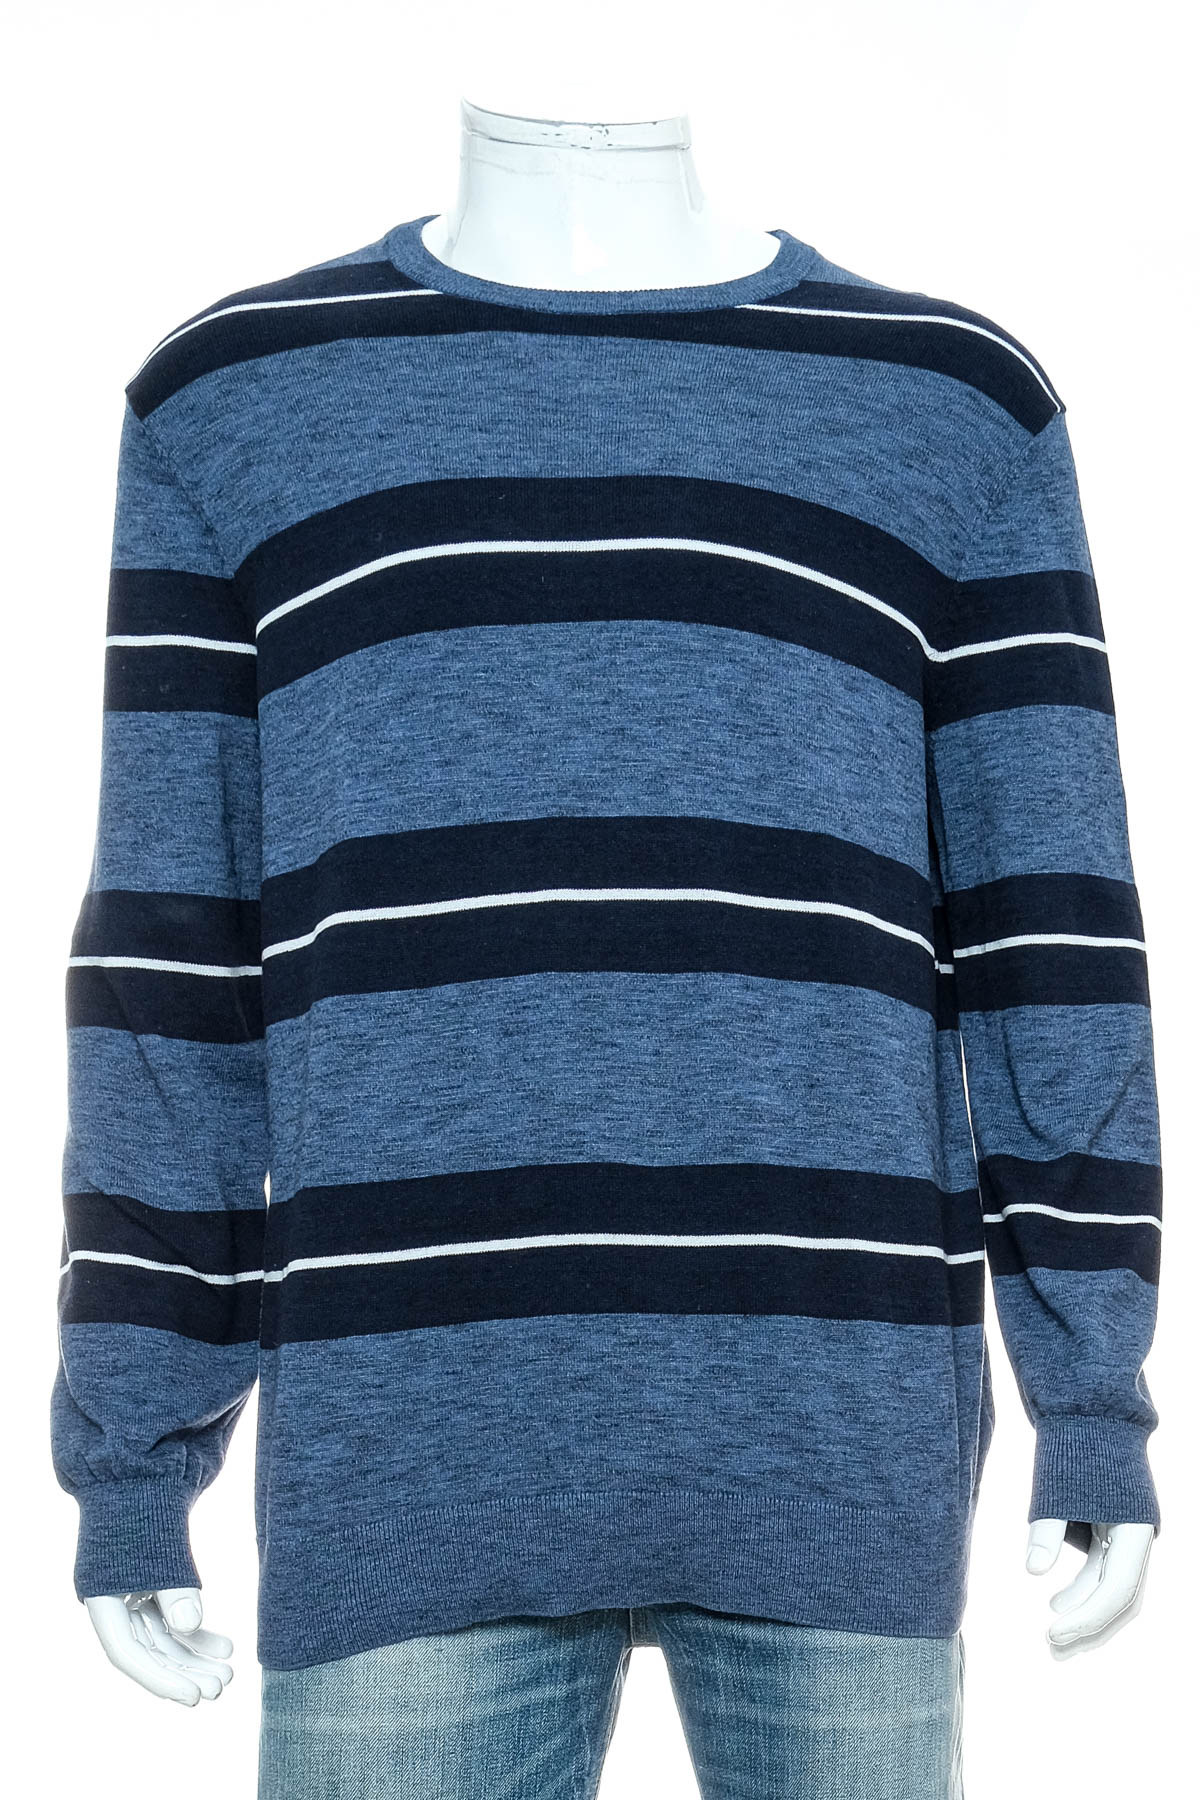 Men's sweater - C&A - 0